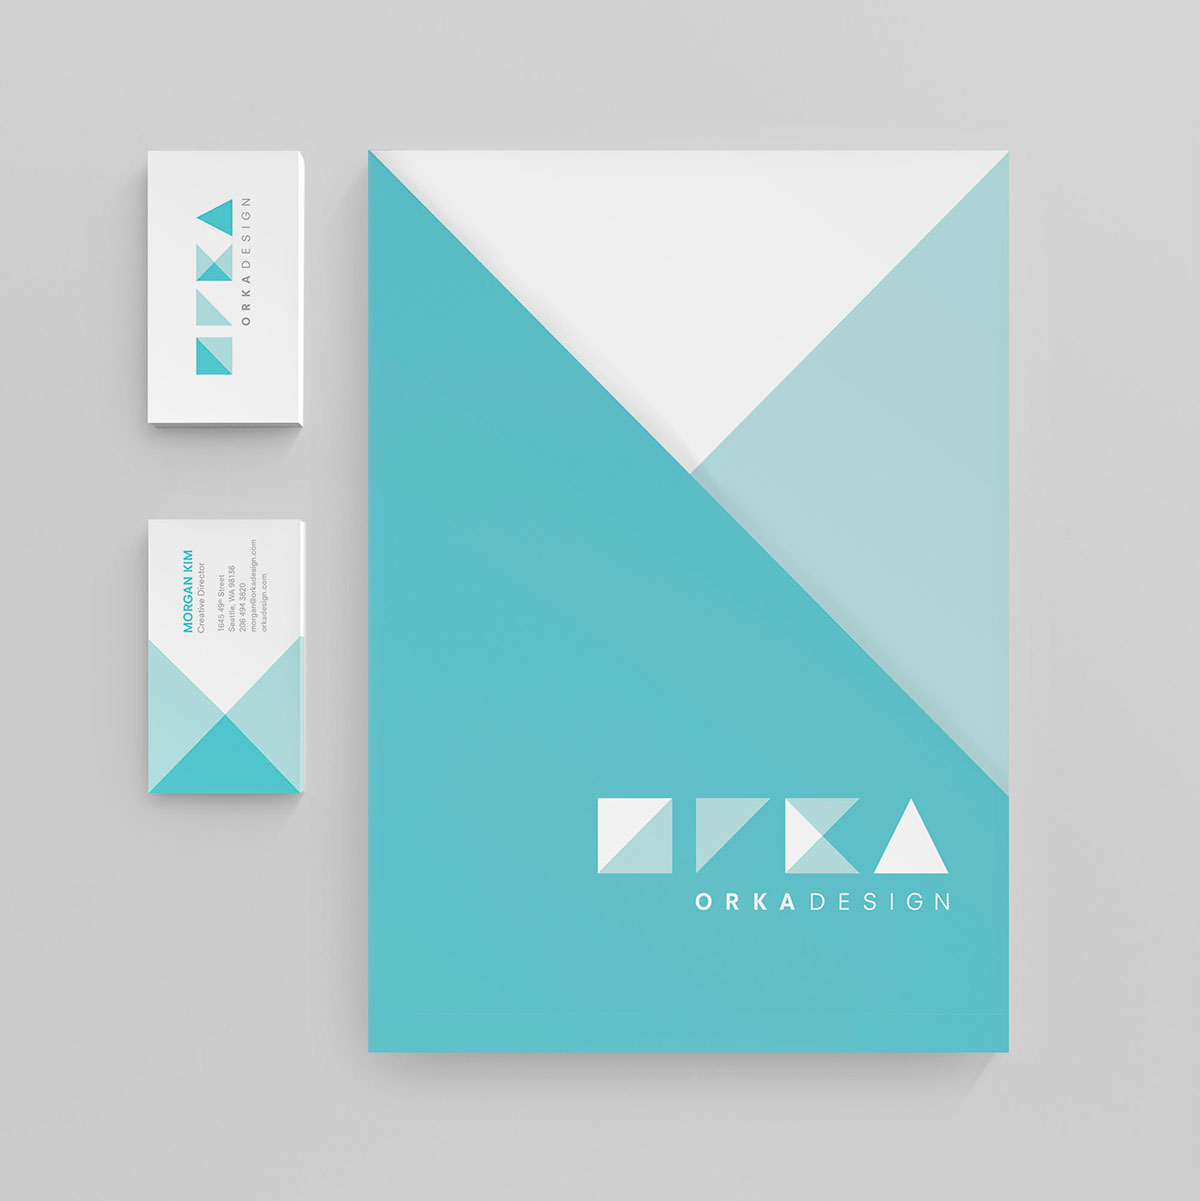 Orka Design orka design firm graphic design firm corporate branding geometric seattle stationary